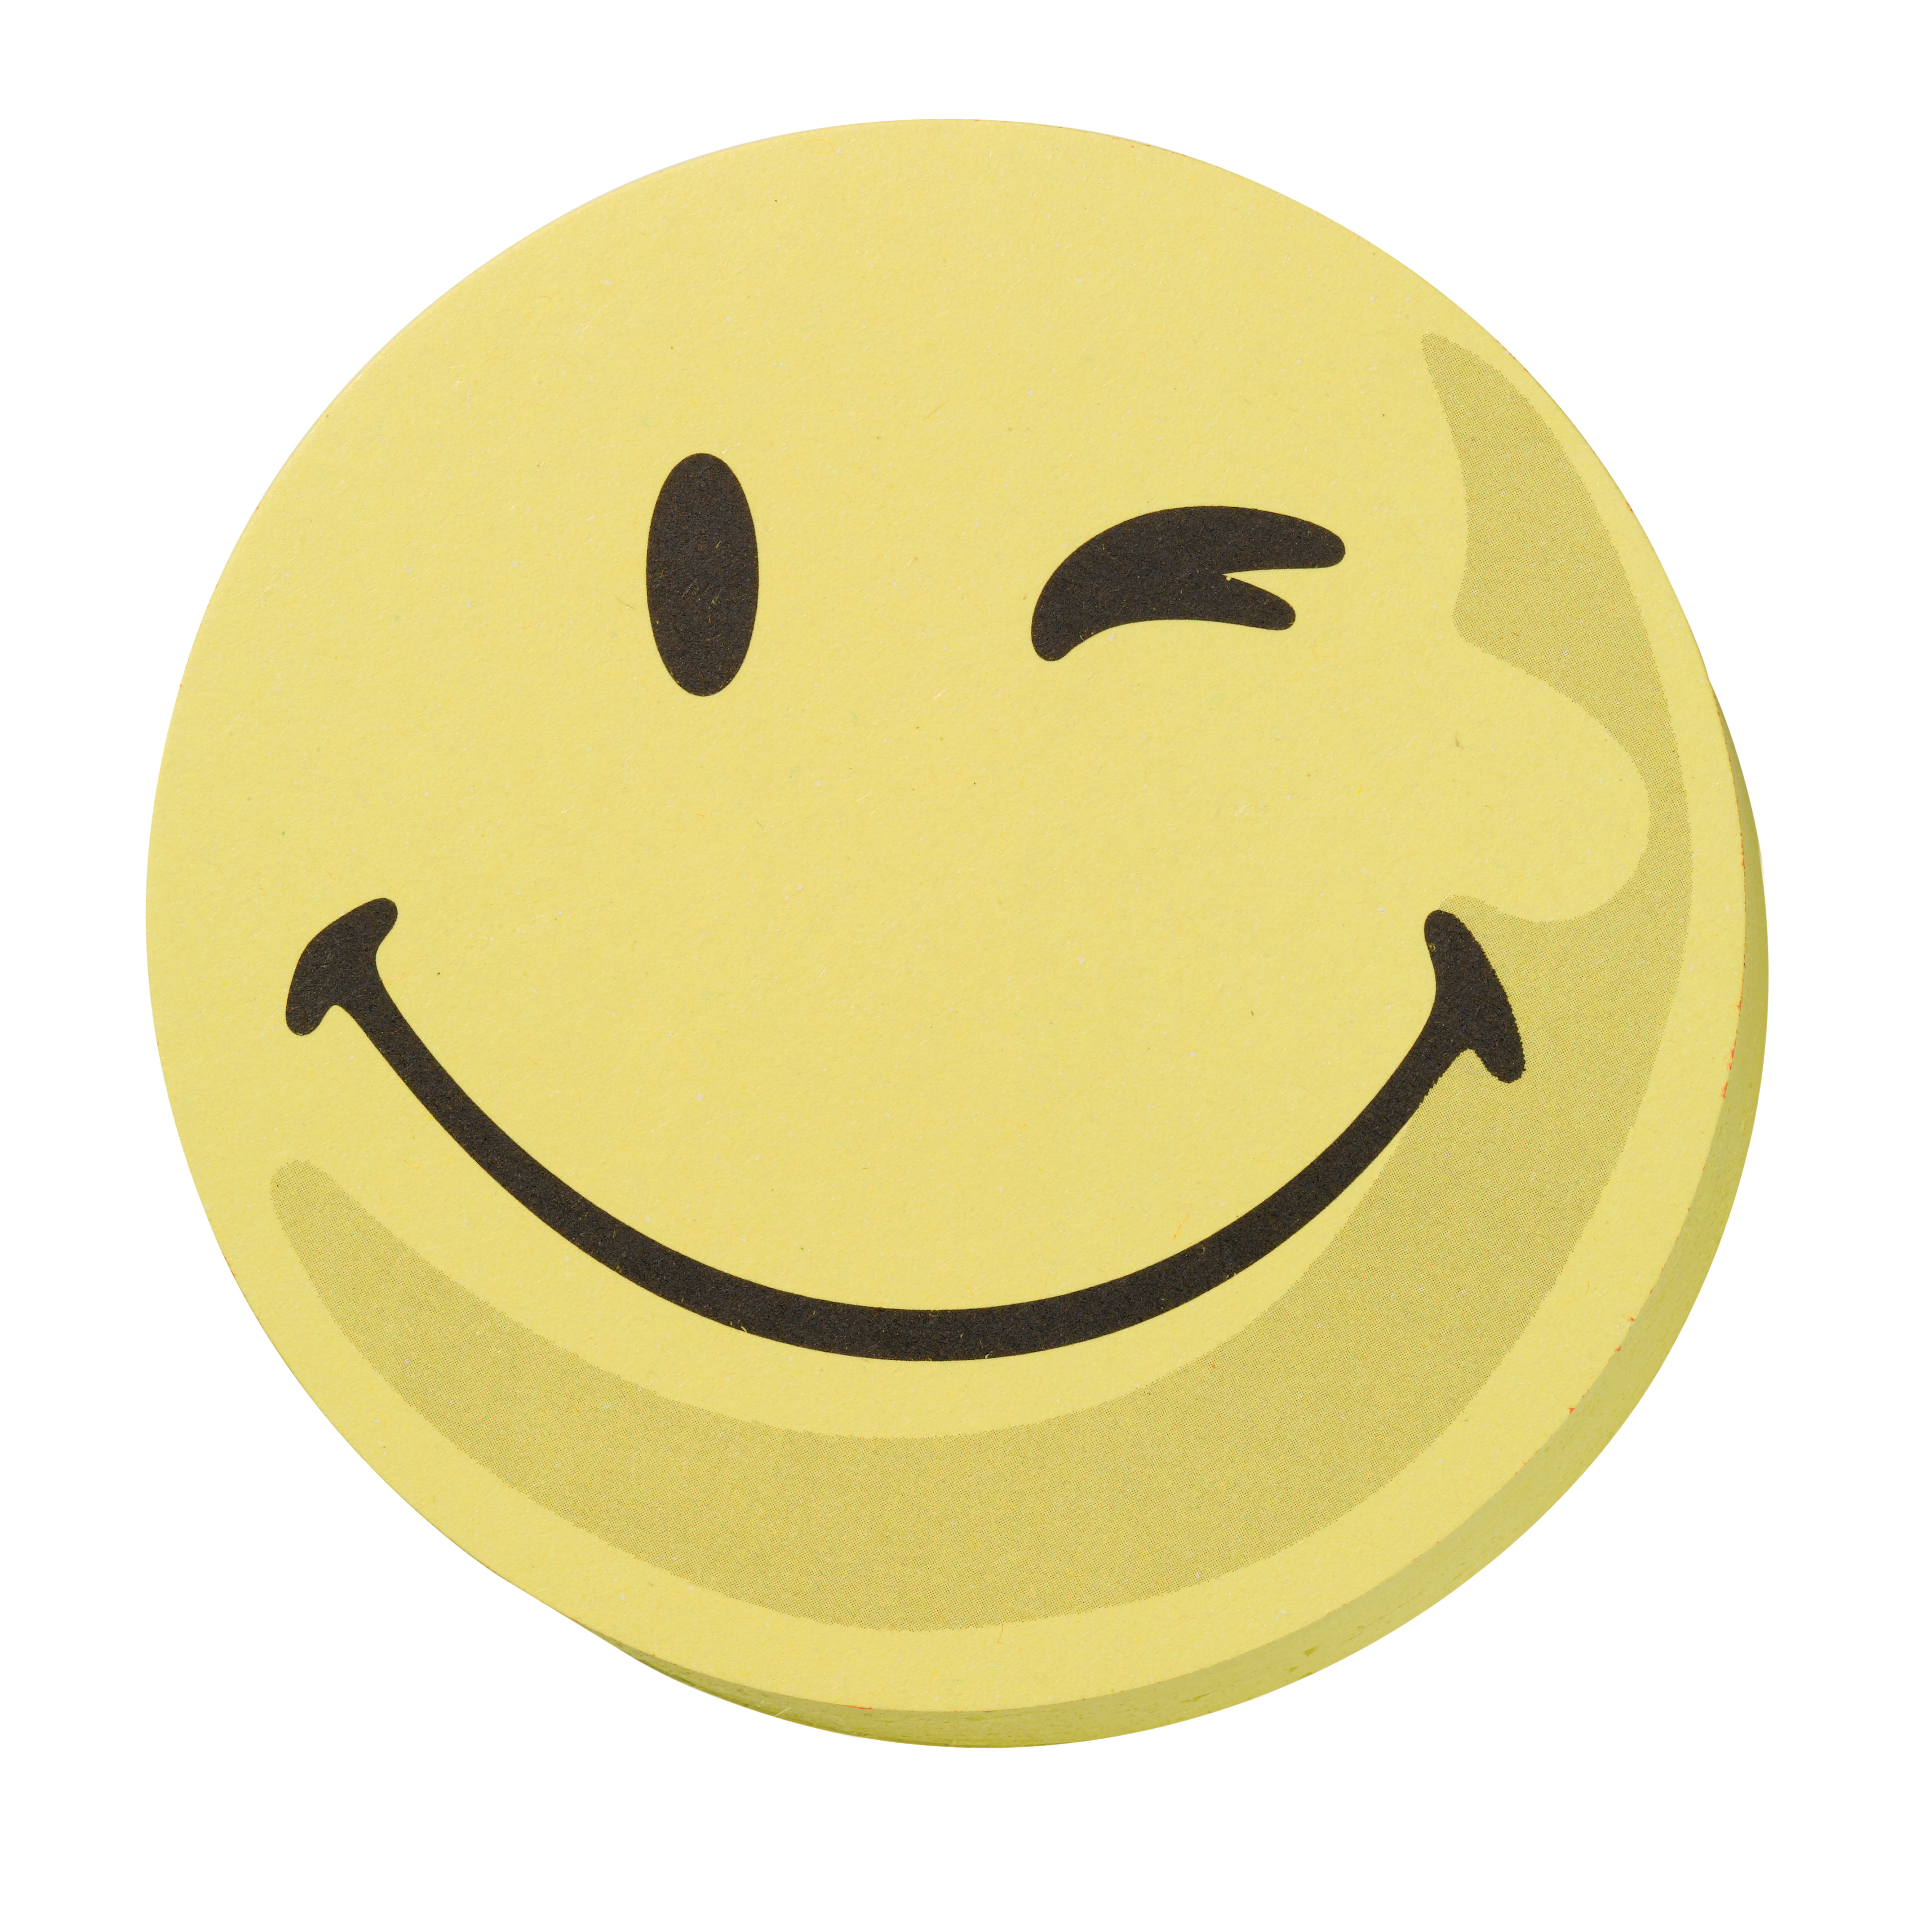 FRANKEN Cartes presentation smile UMZ 10 S1 positiv 9.5cm / jaune positiv 9.5cm / jaune